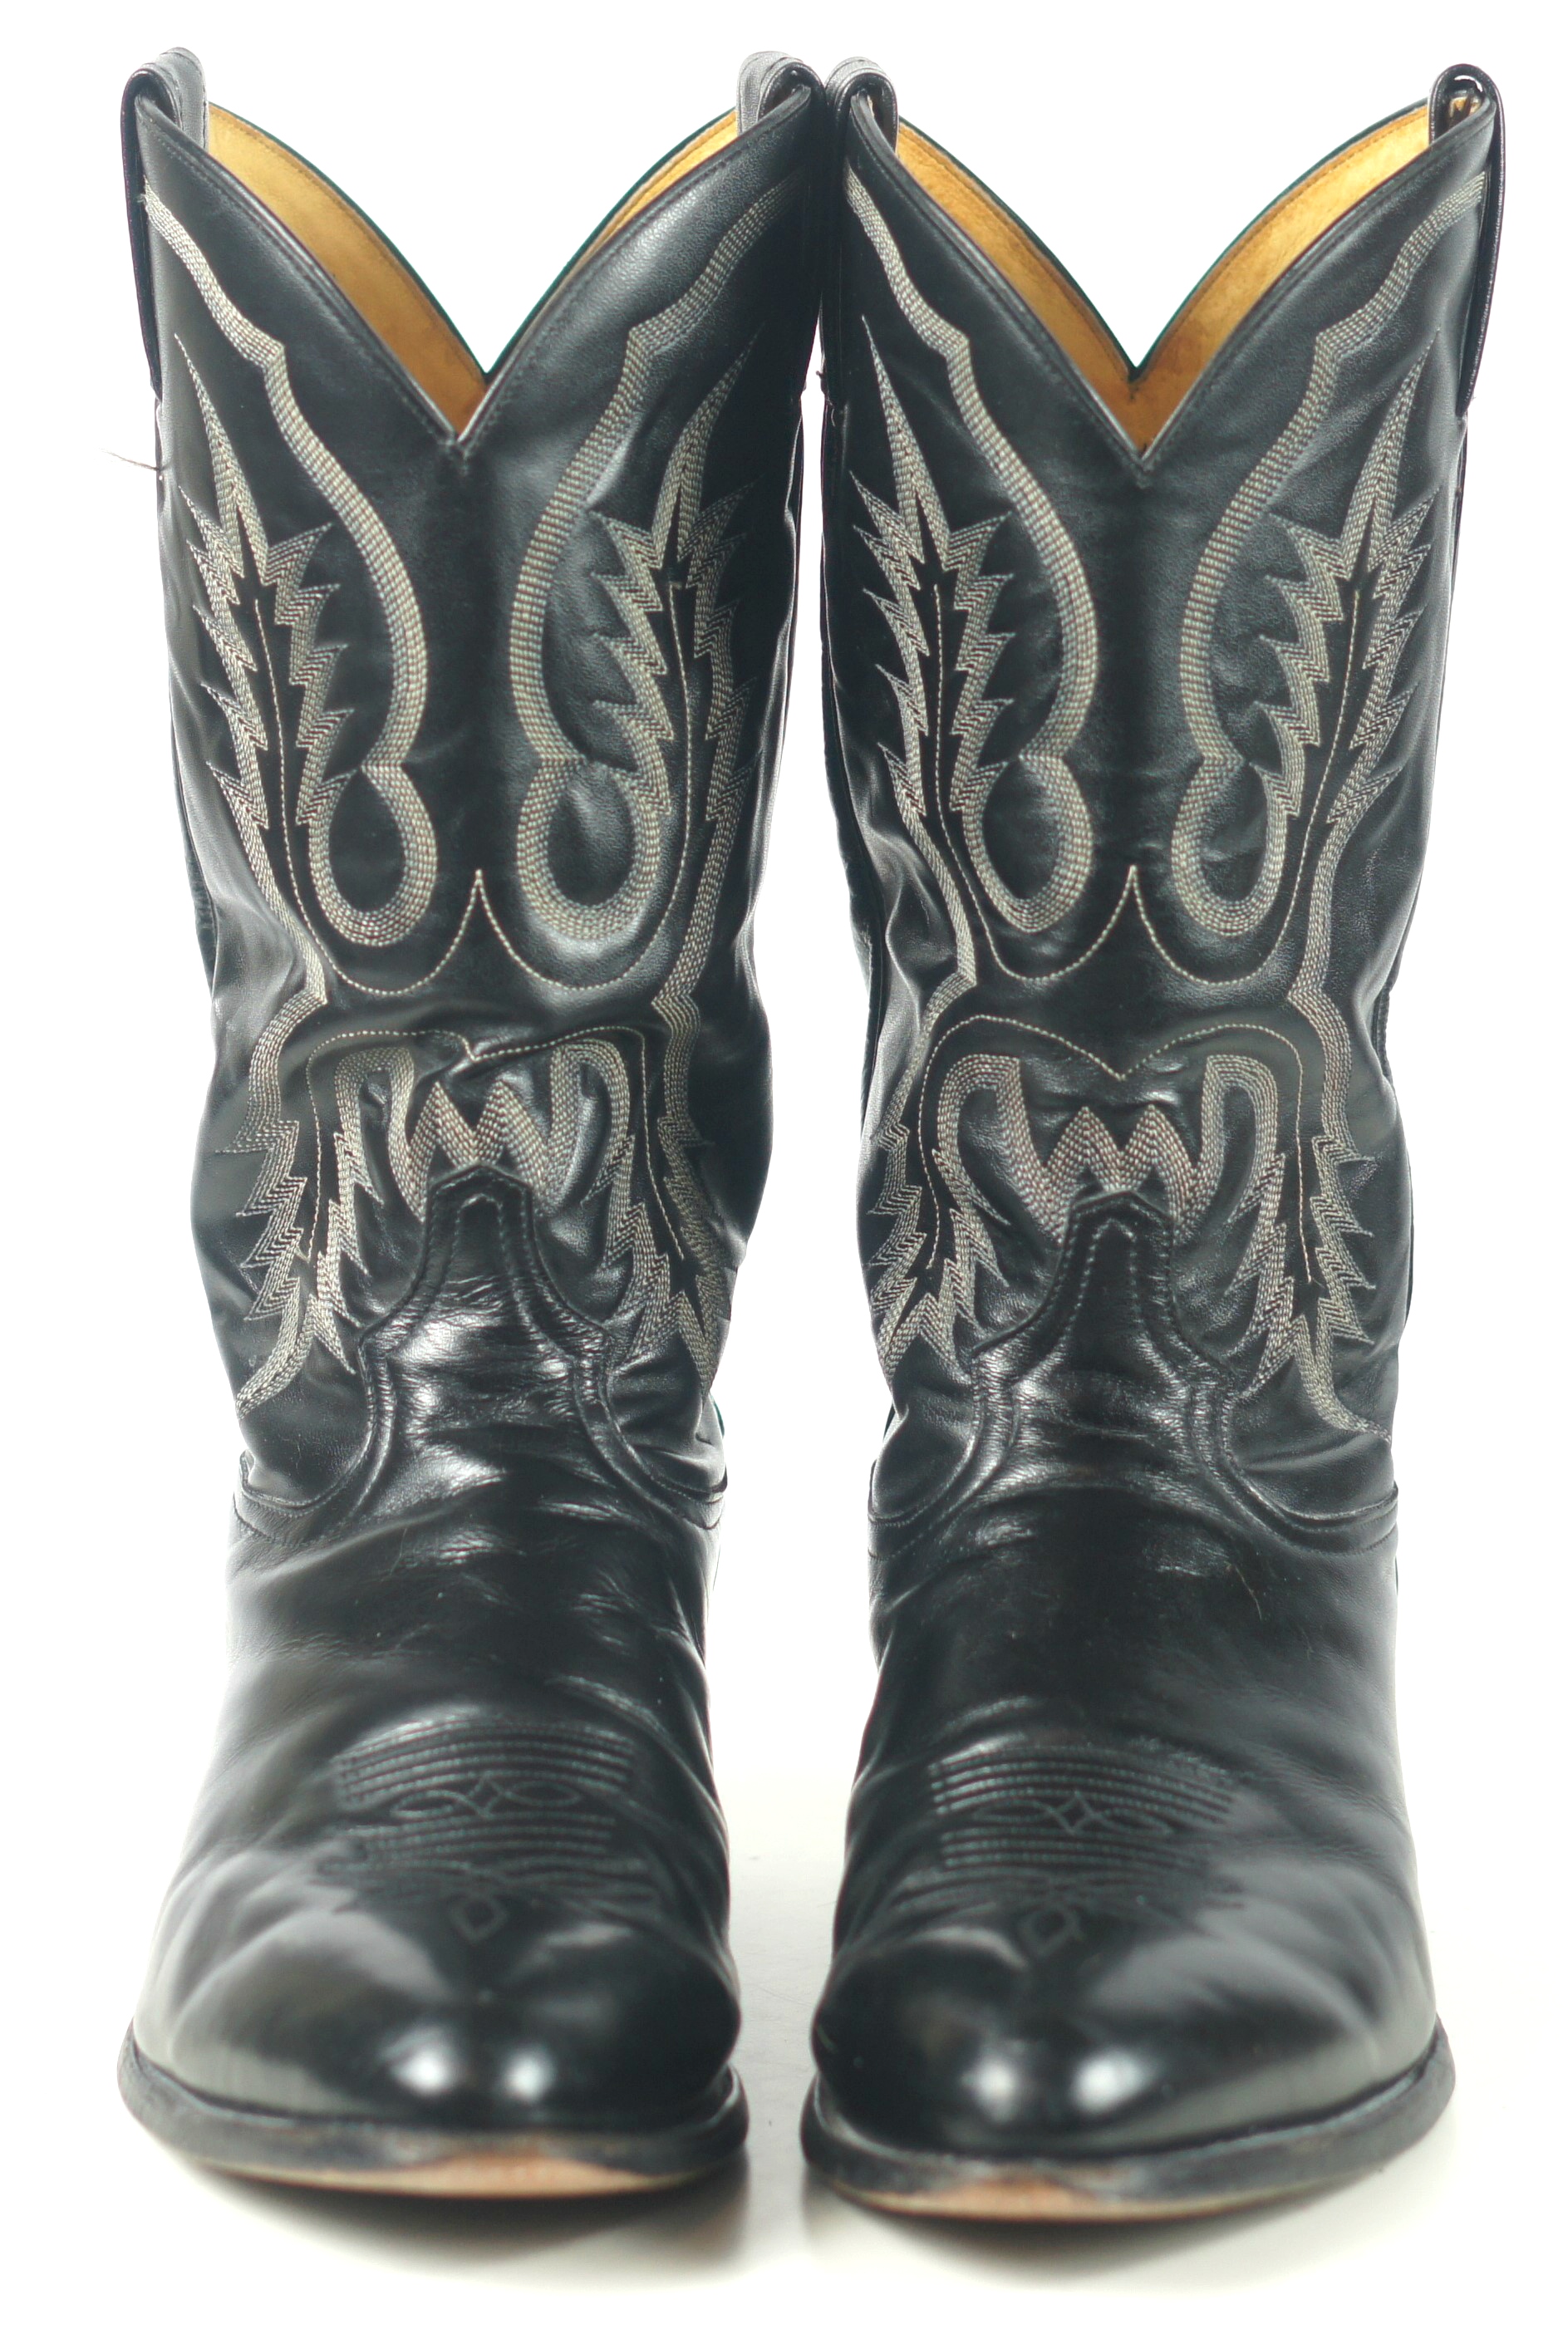 Tony Lama Cowboy Western Boots Black Leather Vintage US Texas Made Men ...